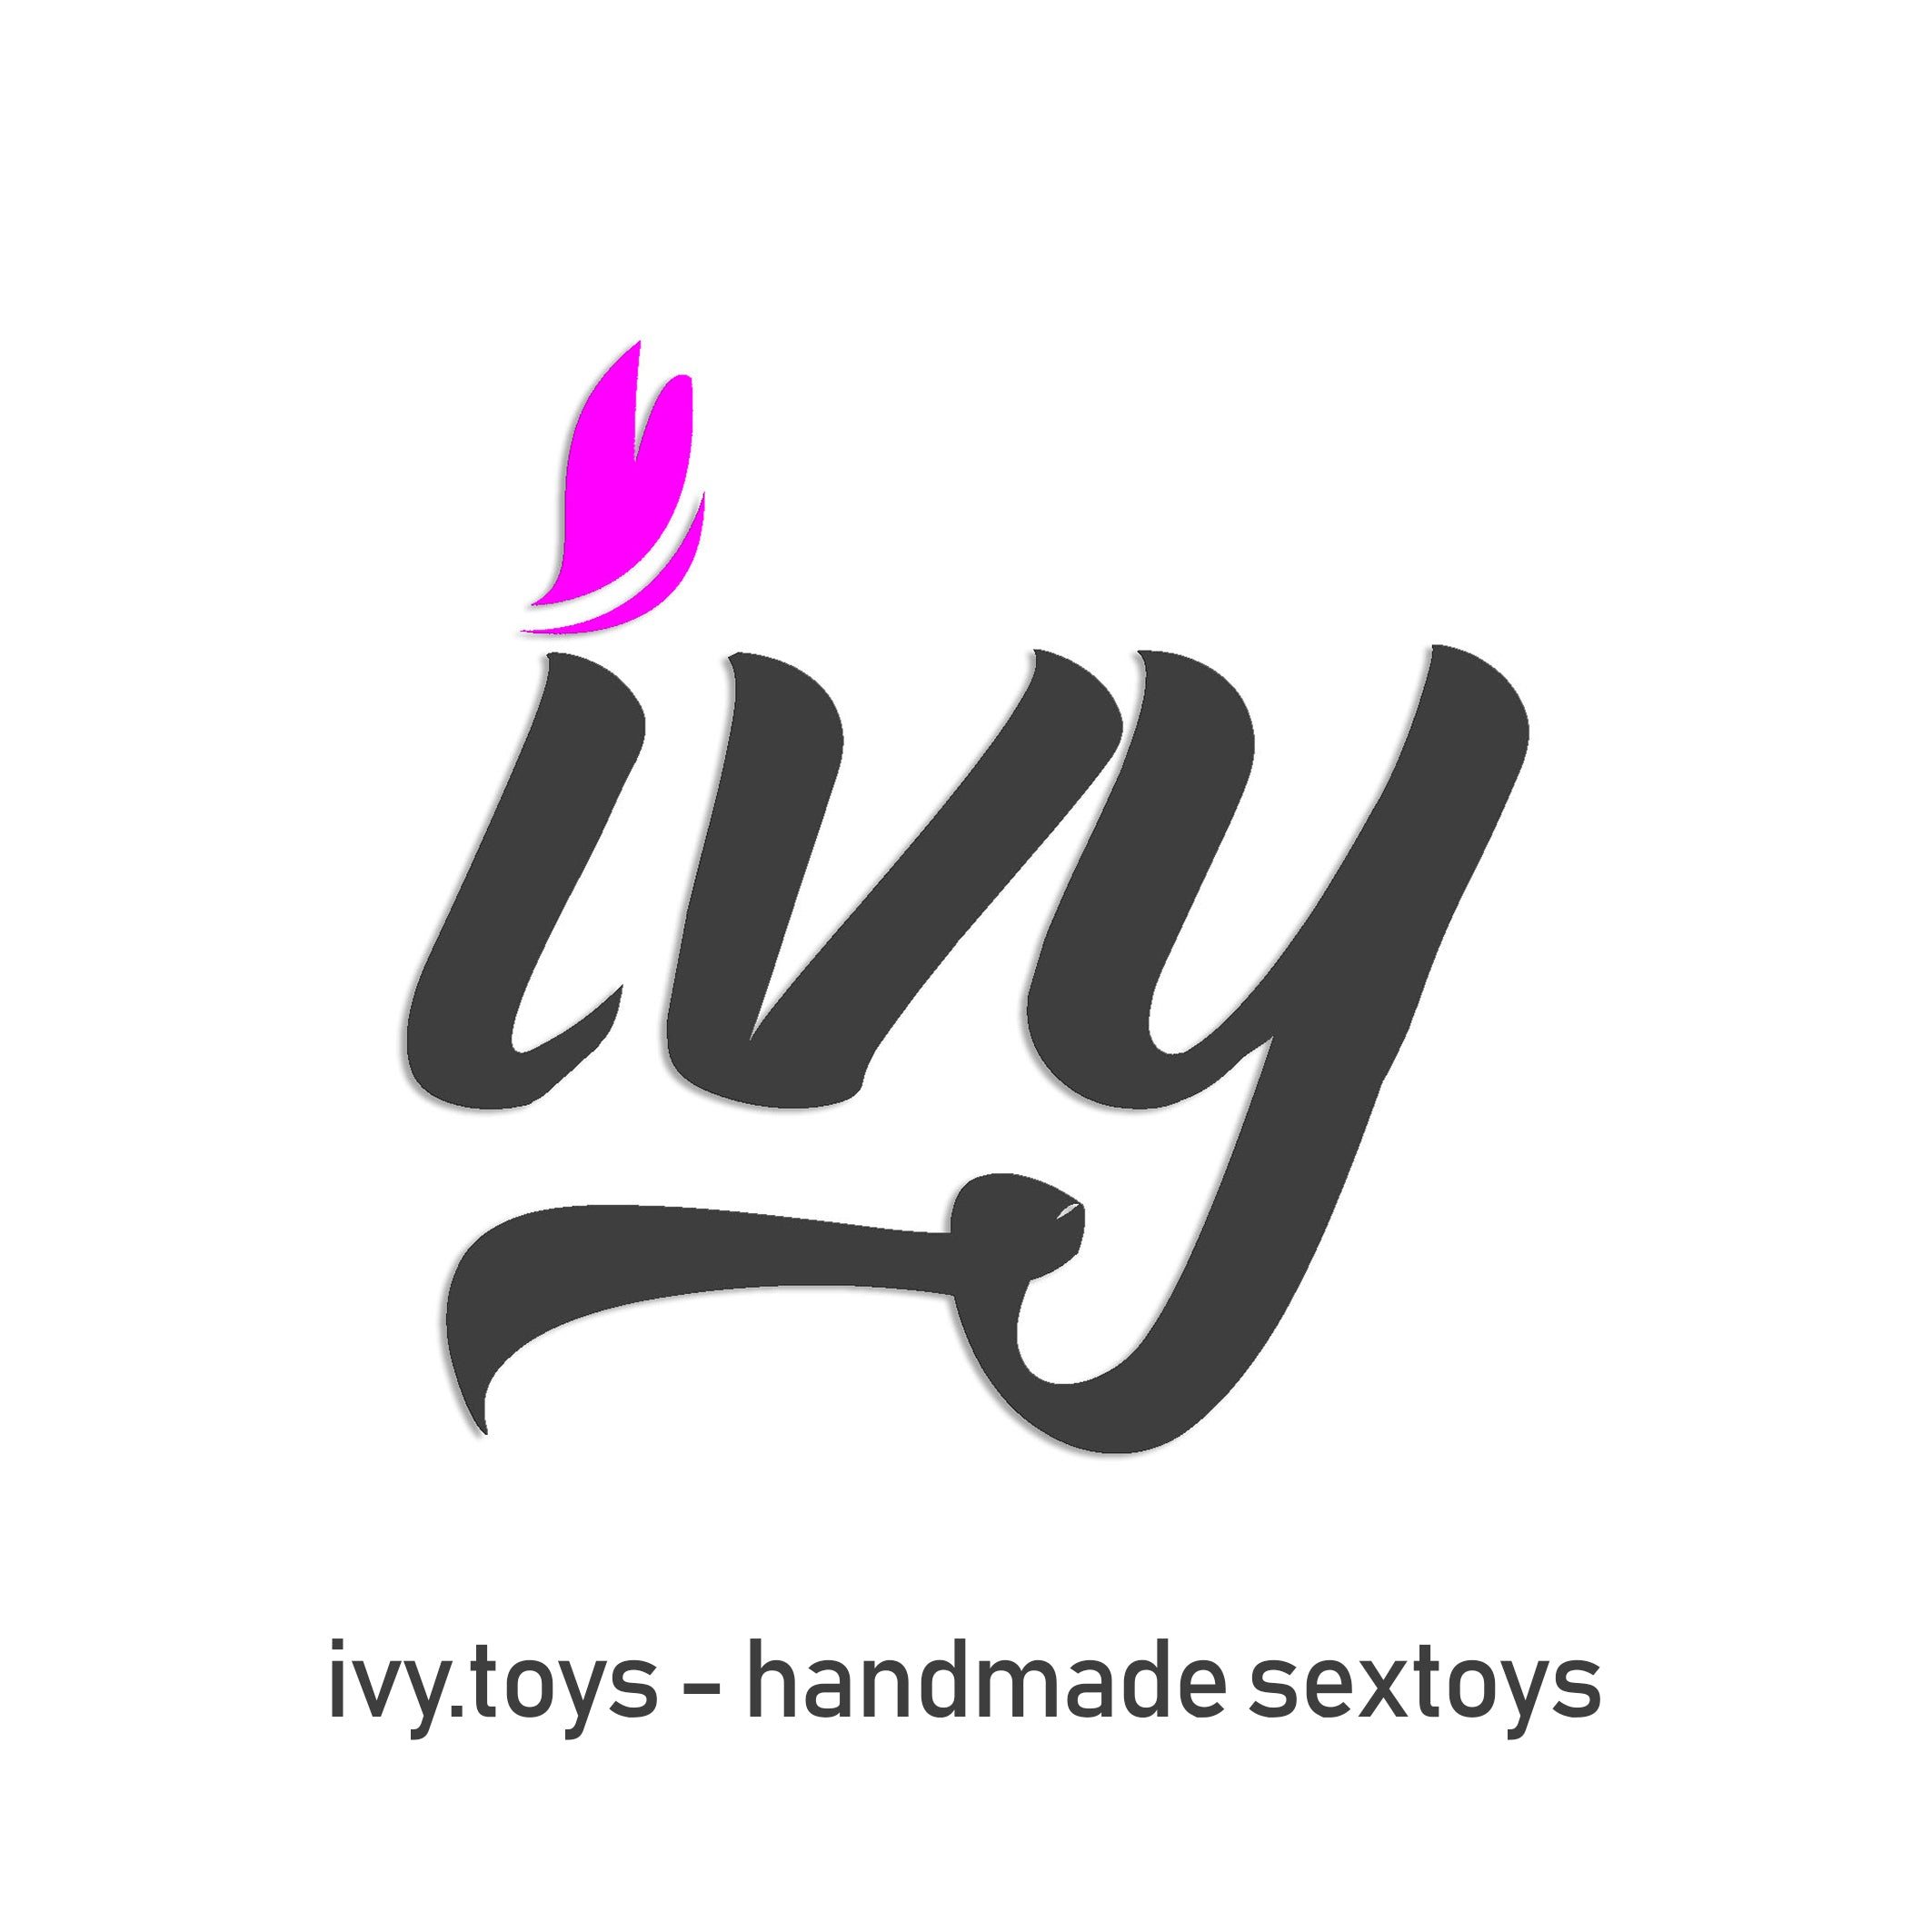 ivy.toys